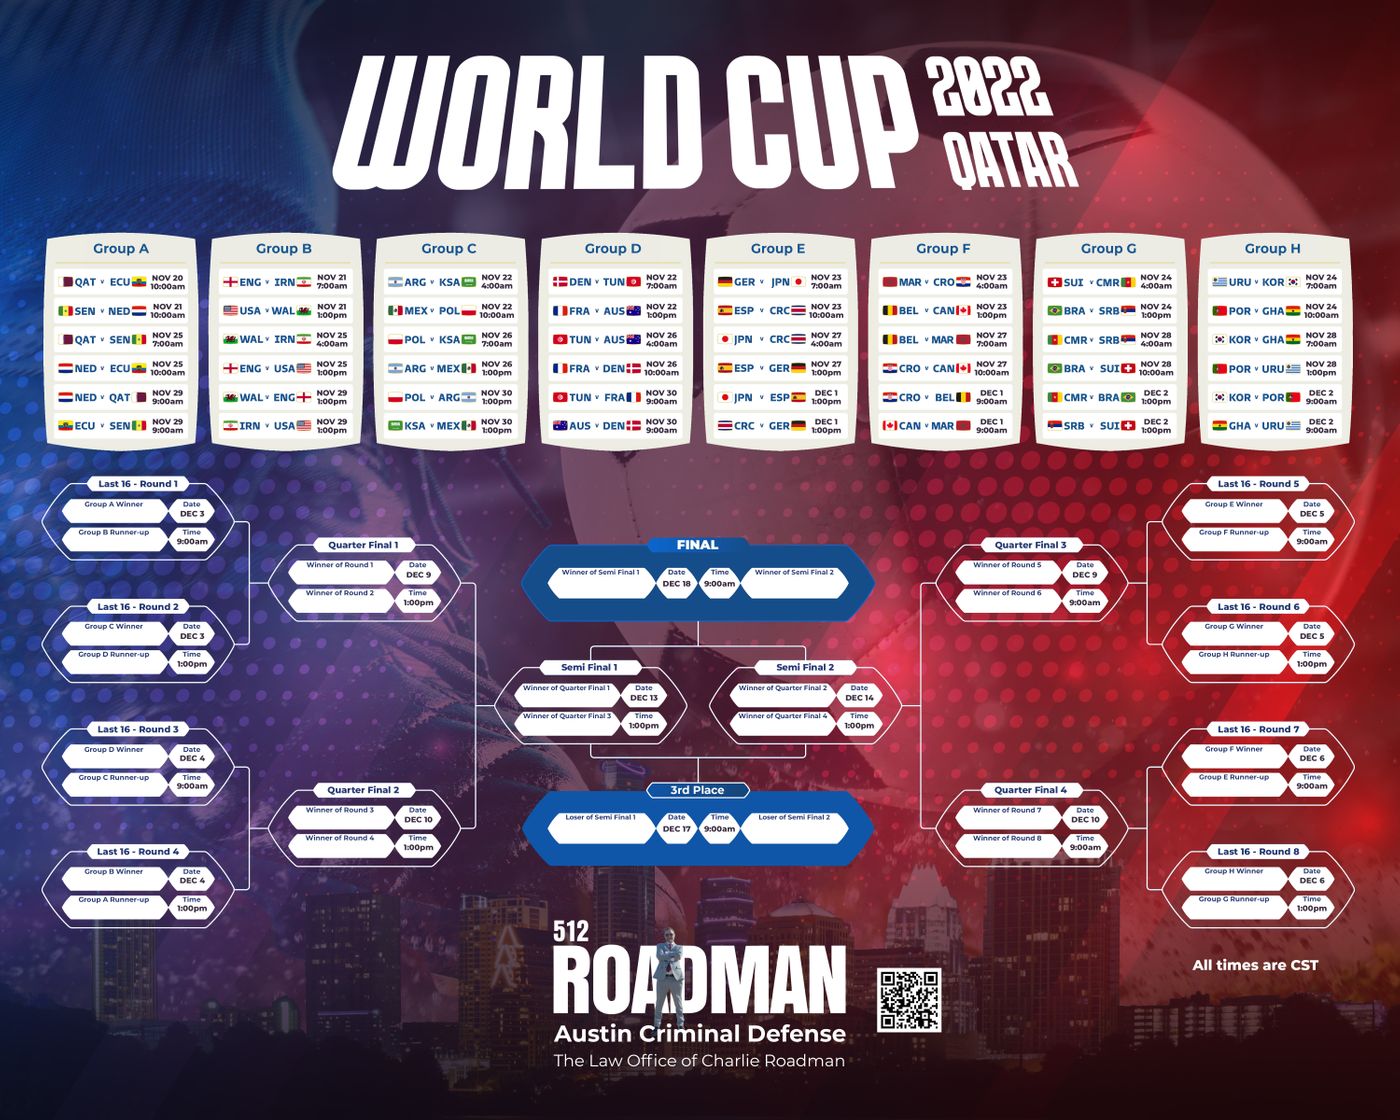 Charlie-Roadman-World-Cup-Qatar-Poster-v5.jpg